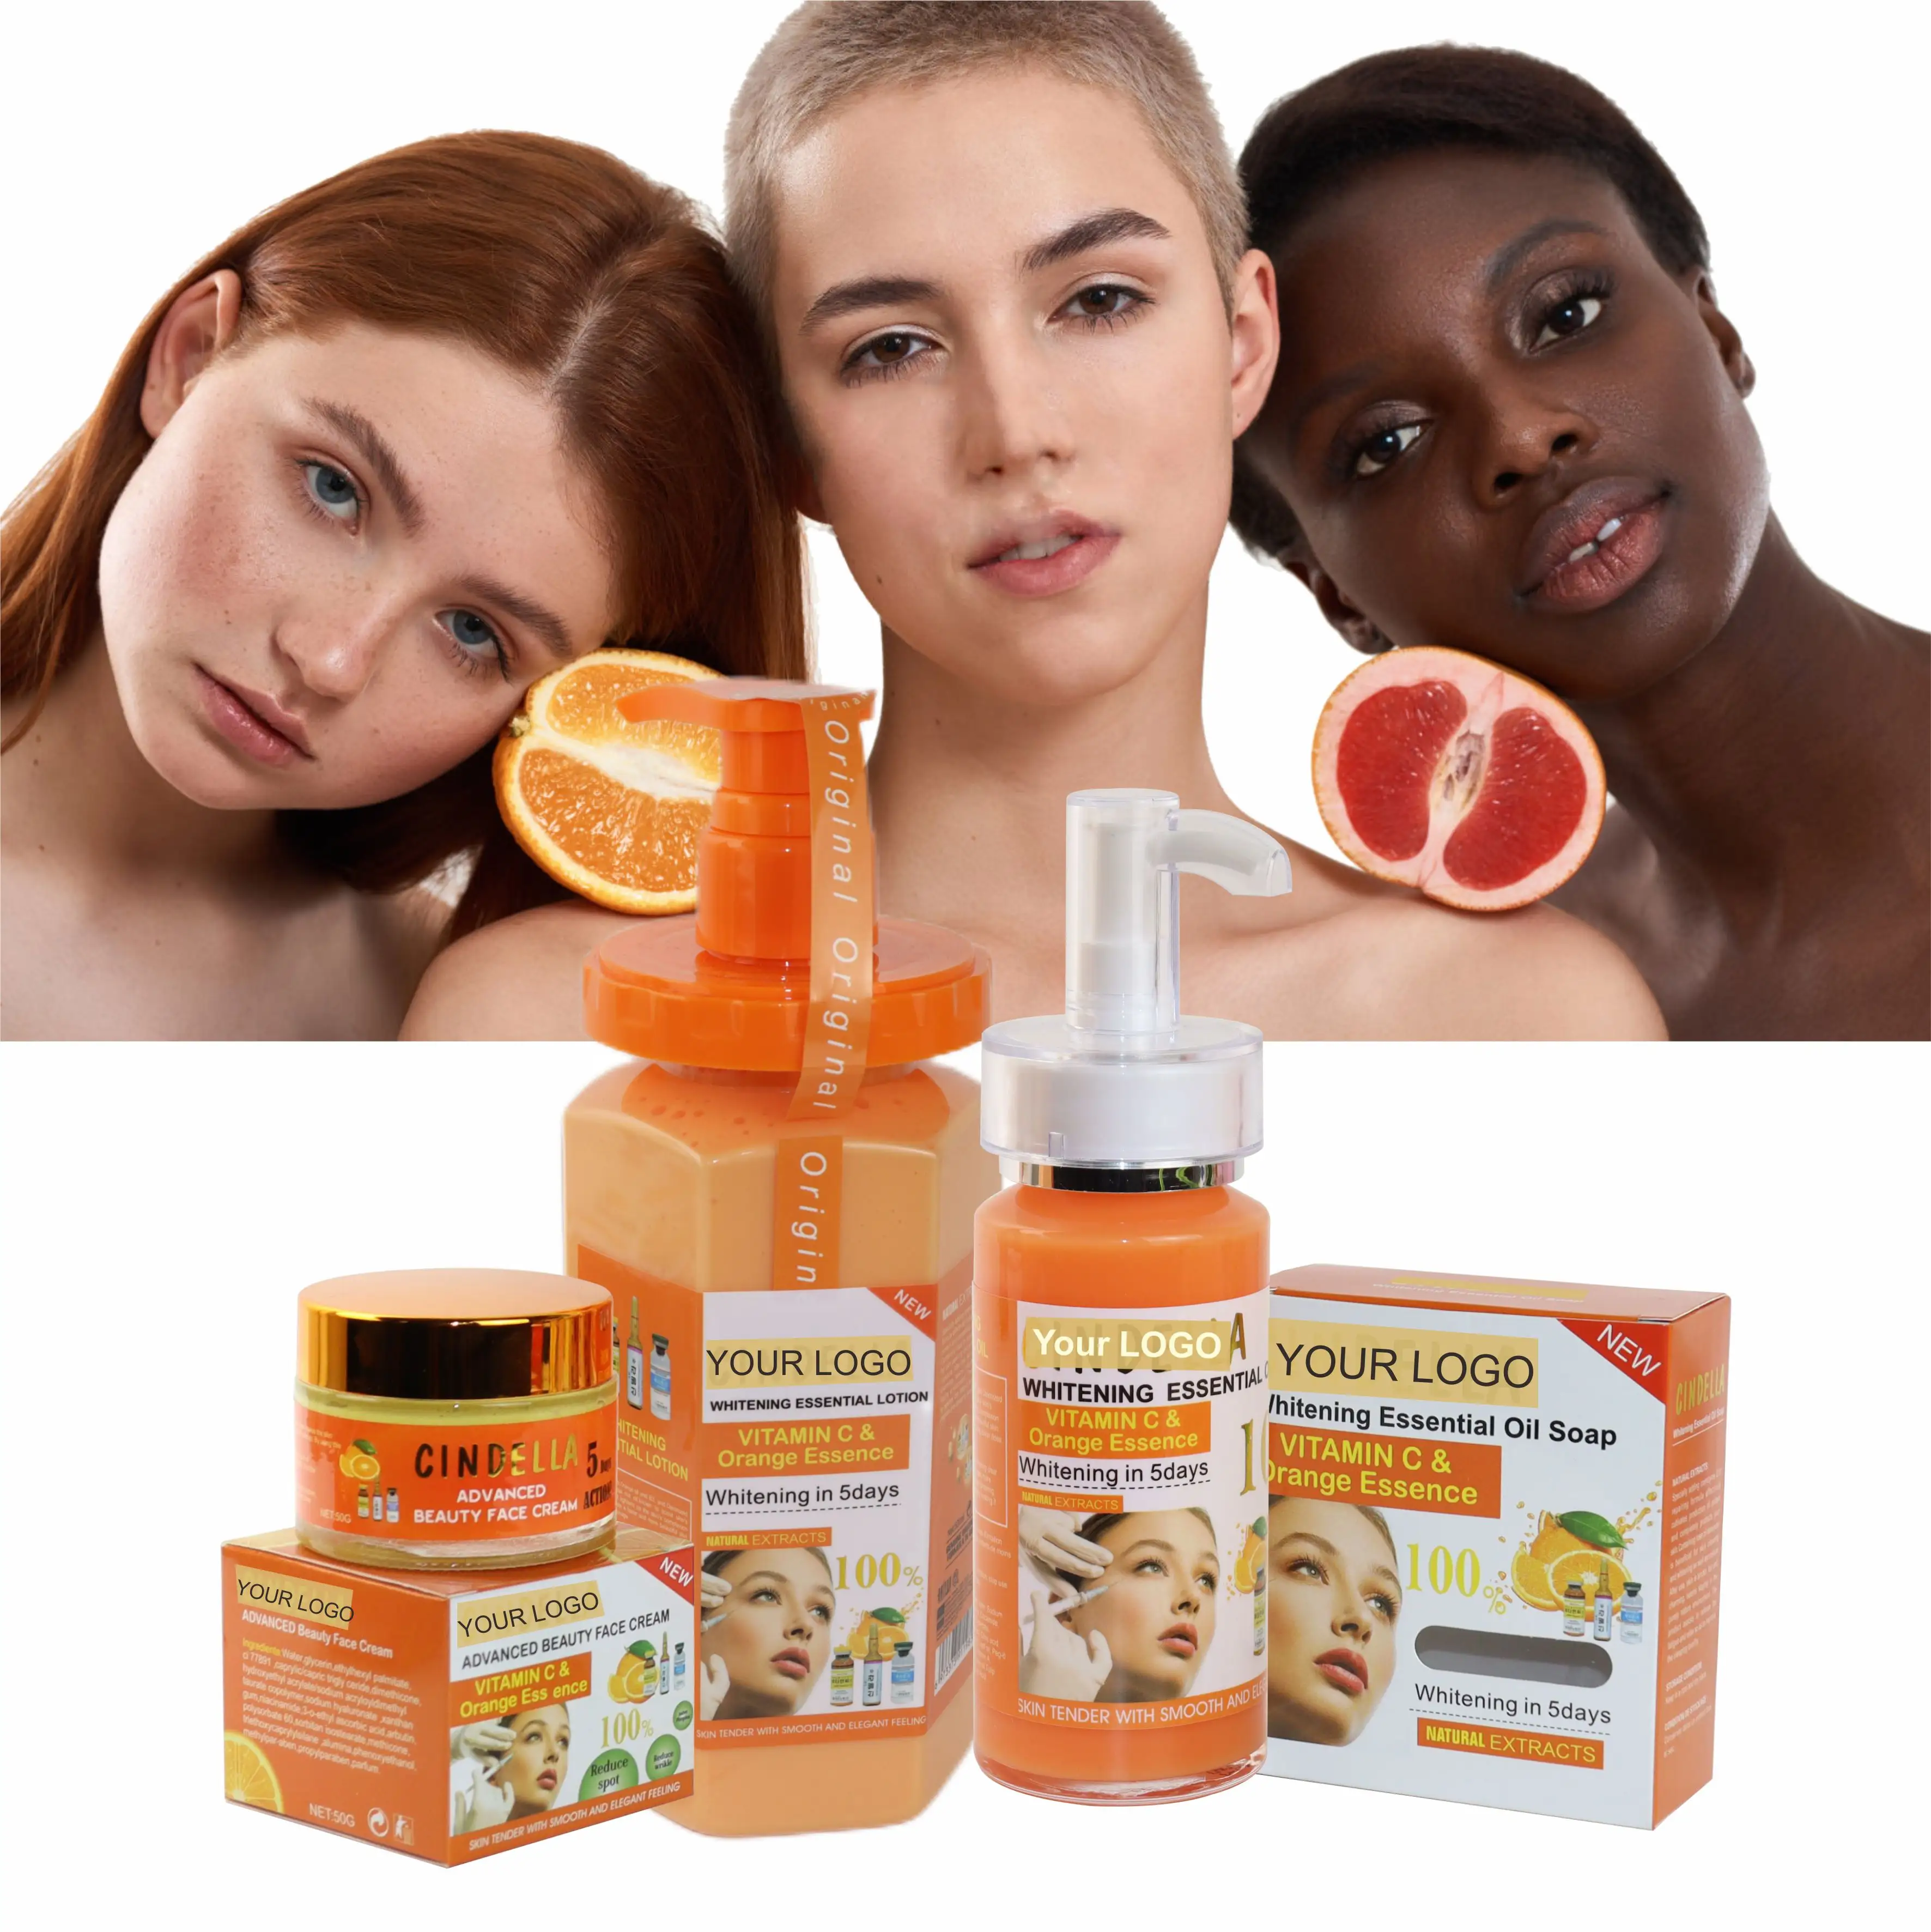 निजी लेबल सौंदर्य नारंगी तेल 99% विटामिन सी कार्बनिक सुपर व्हाइट चमकती विरोधी शिकन मॉइस्चराइजिंग त्वचा की देखभाल सेट